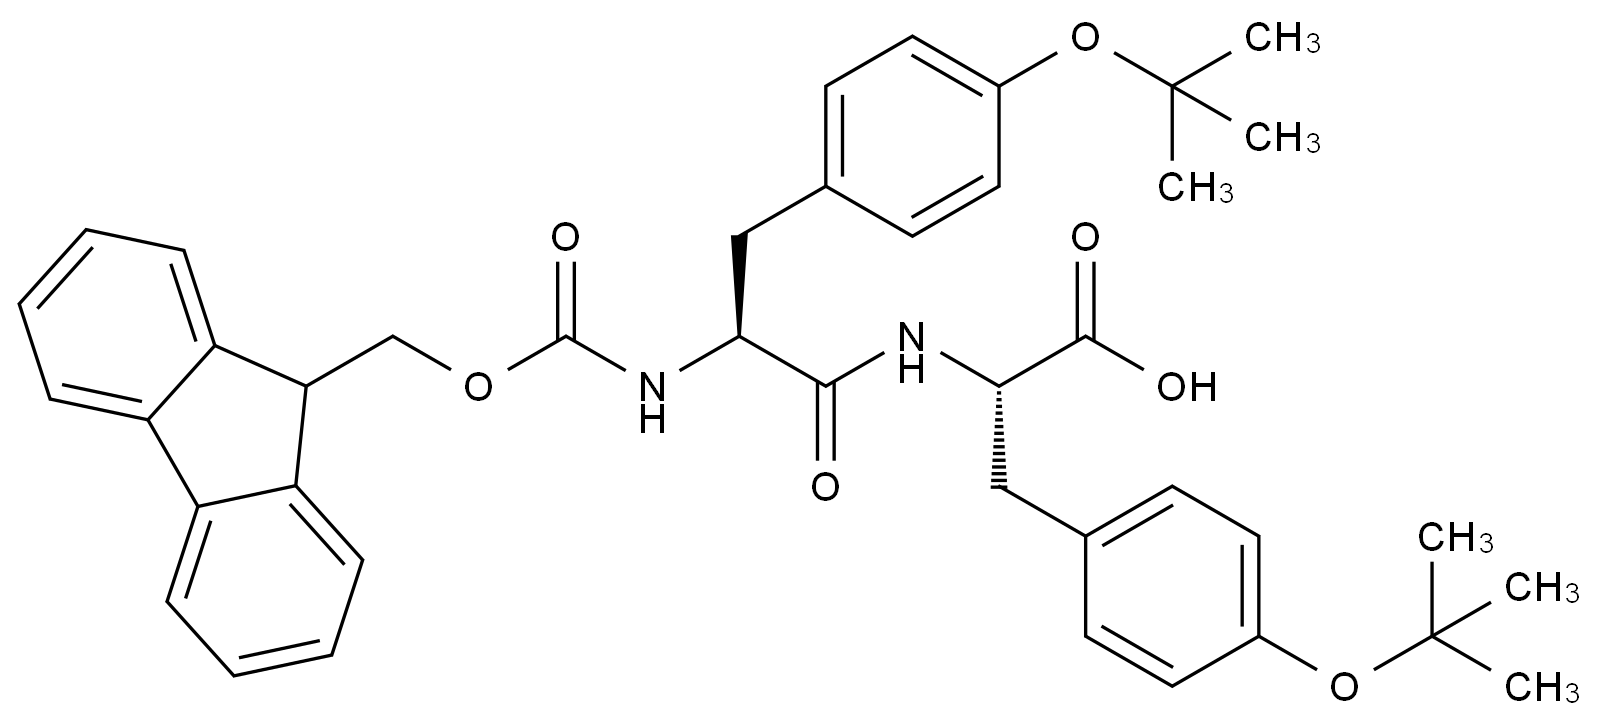 Fmoc-酪氨酸(tBu)-酪氨酸tBu)-OH